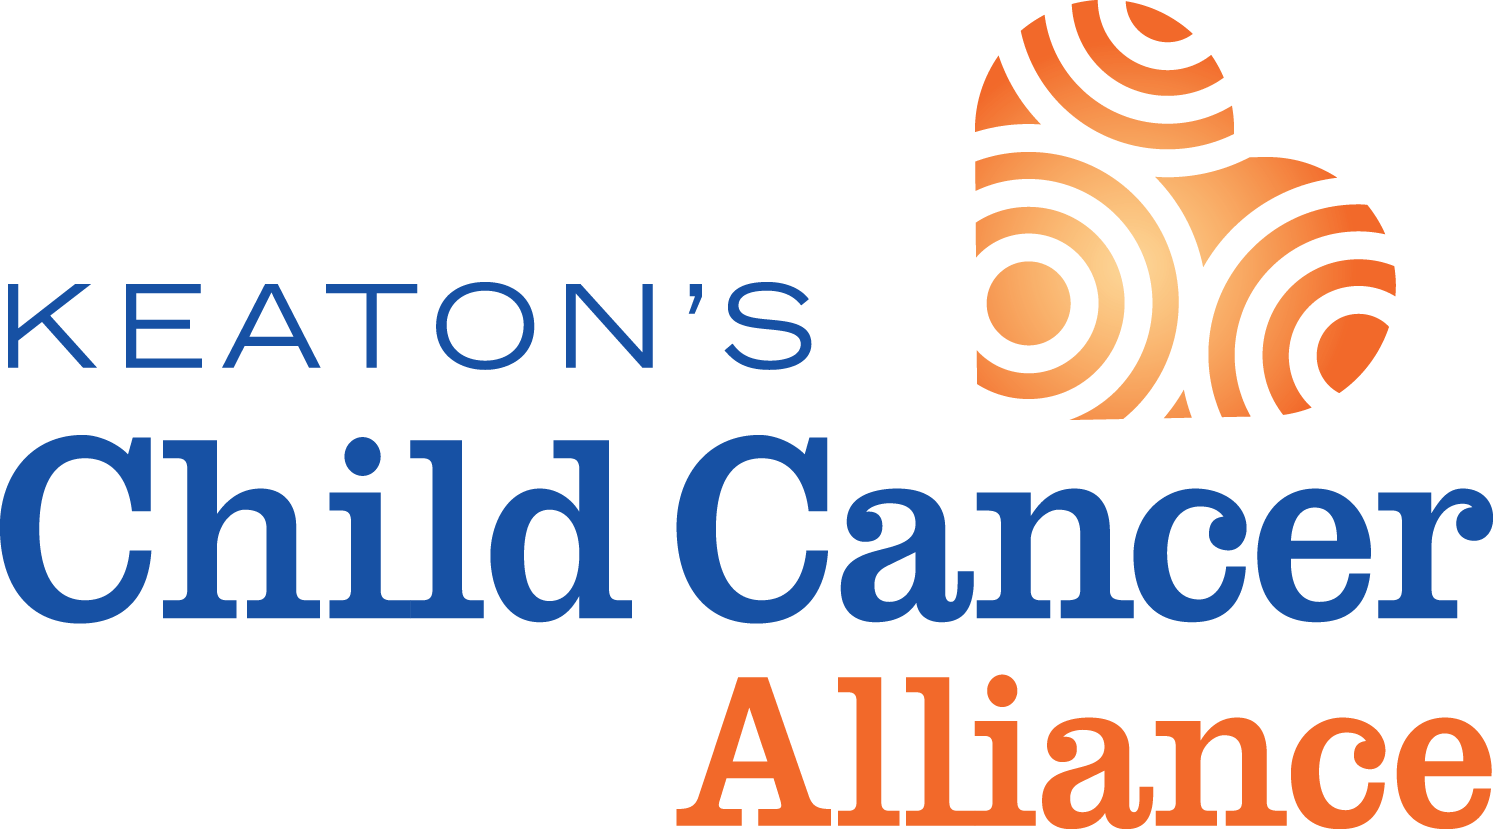 Keaton’s Child Cancer Alliance